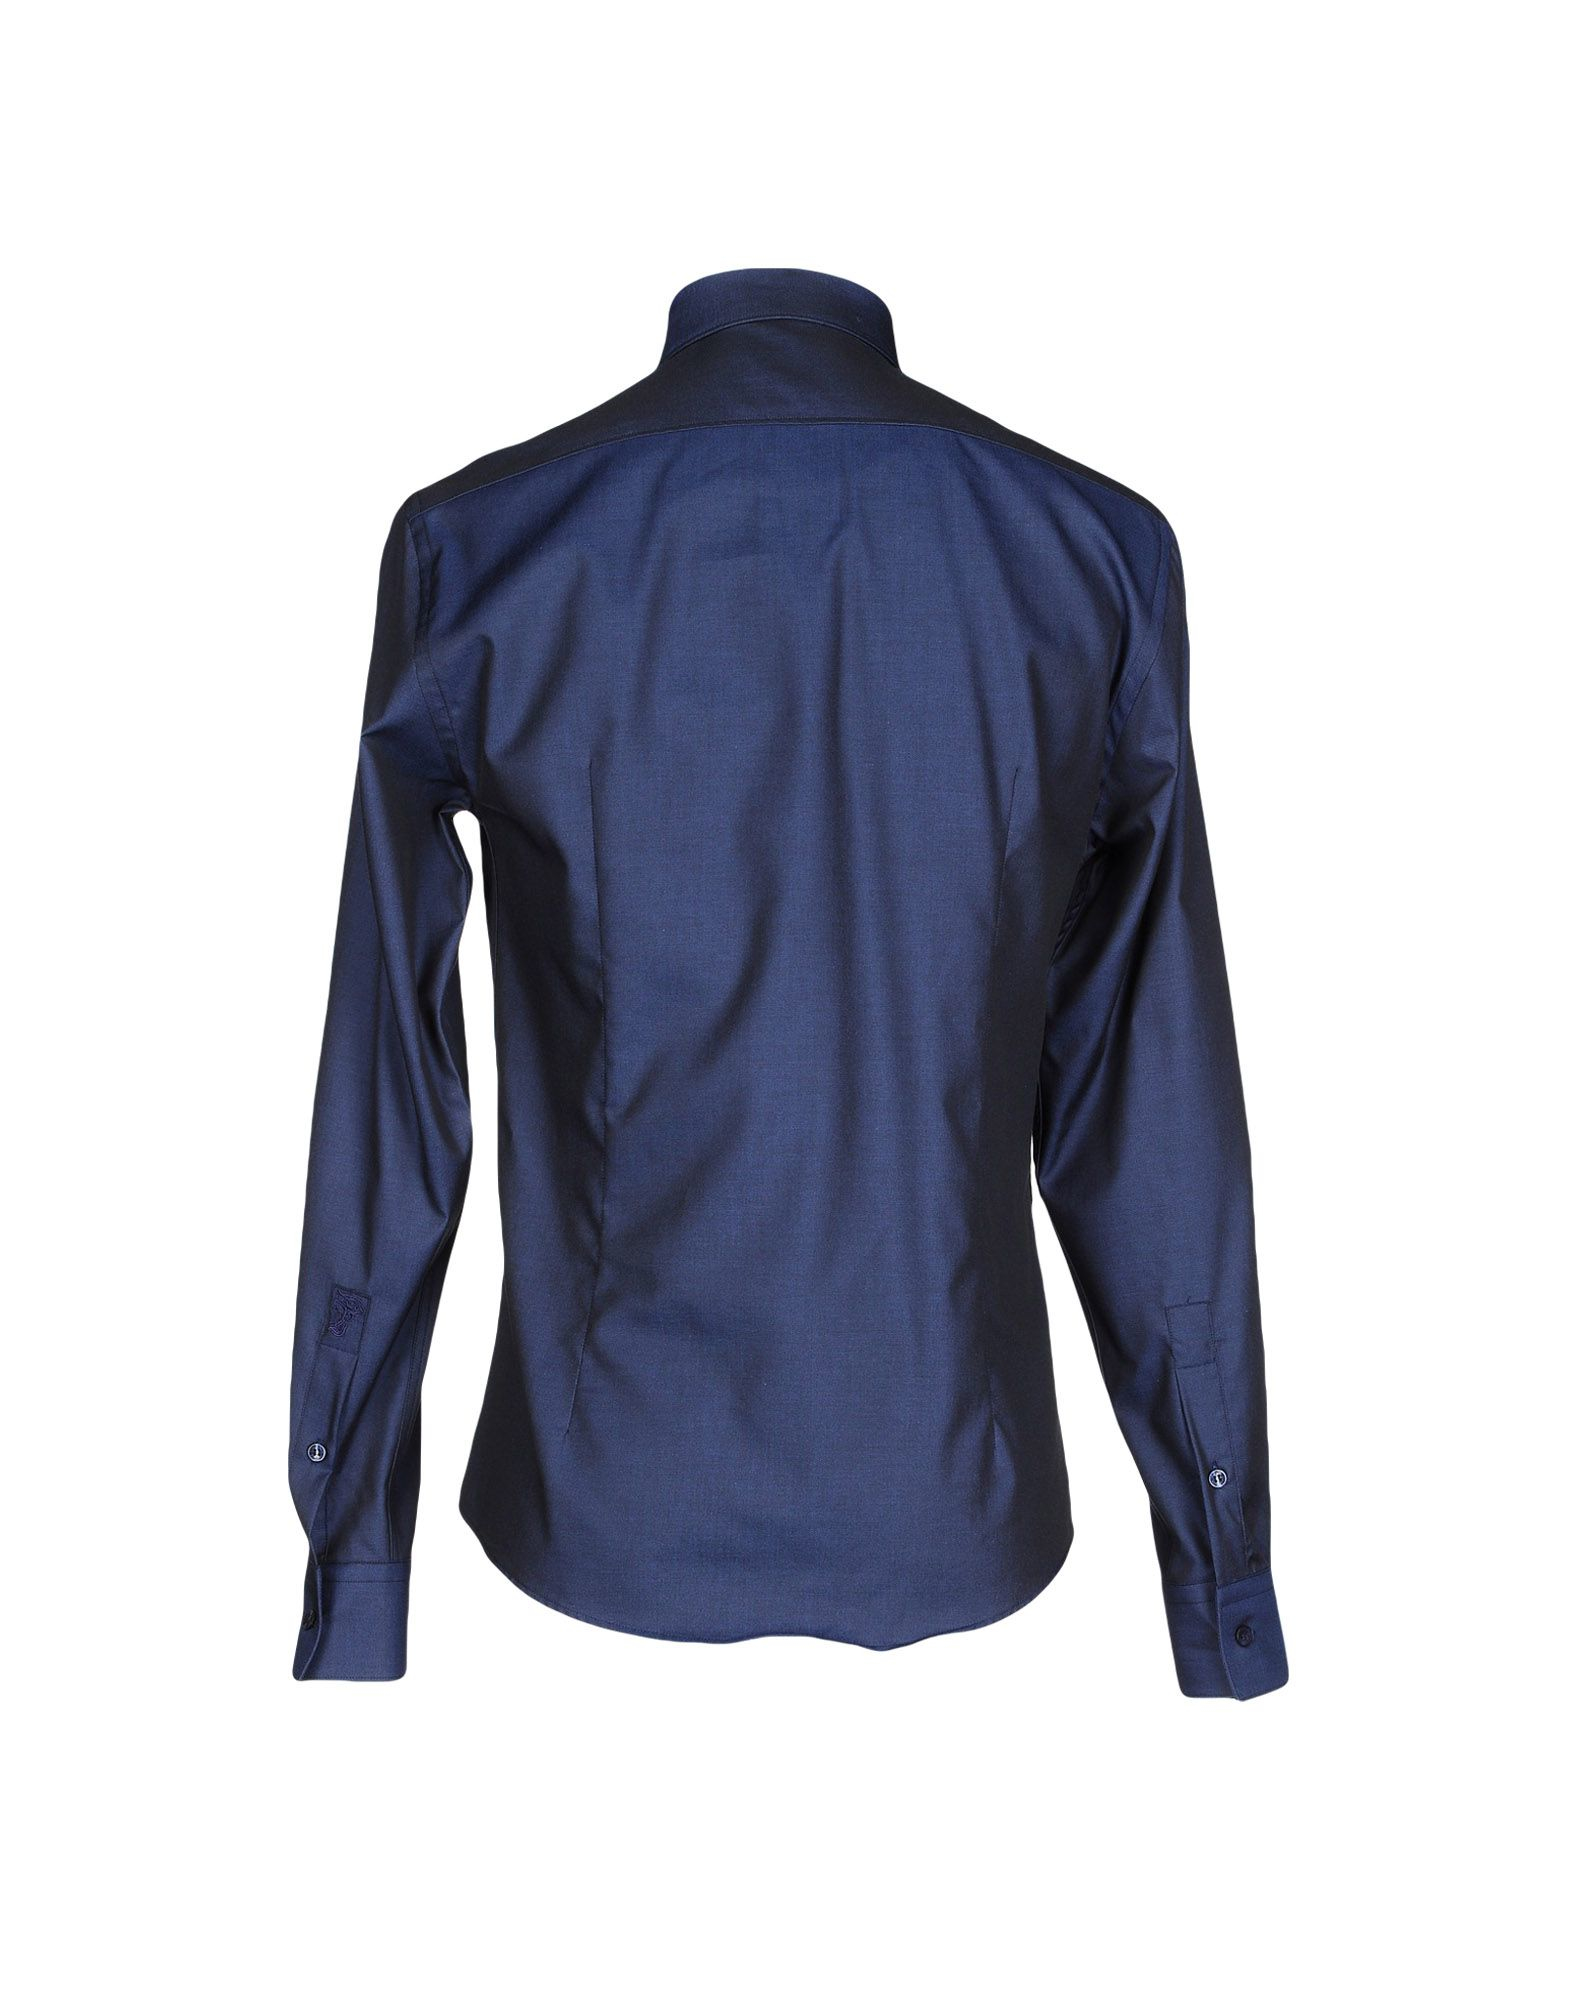 Lyst - Versace Shirt in Blue for Men